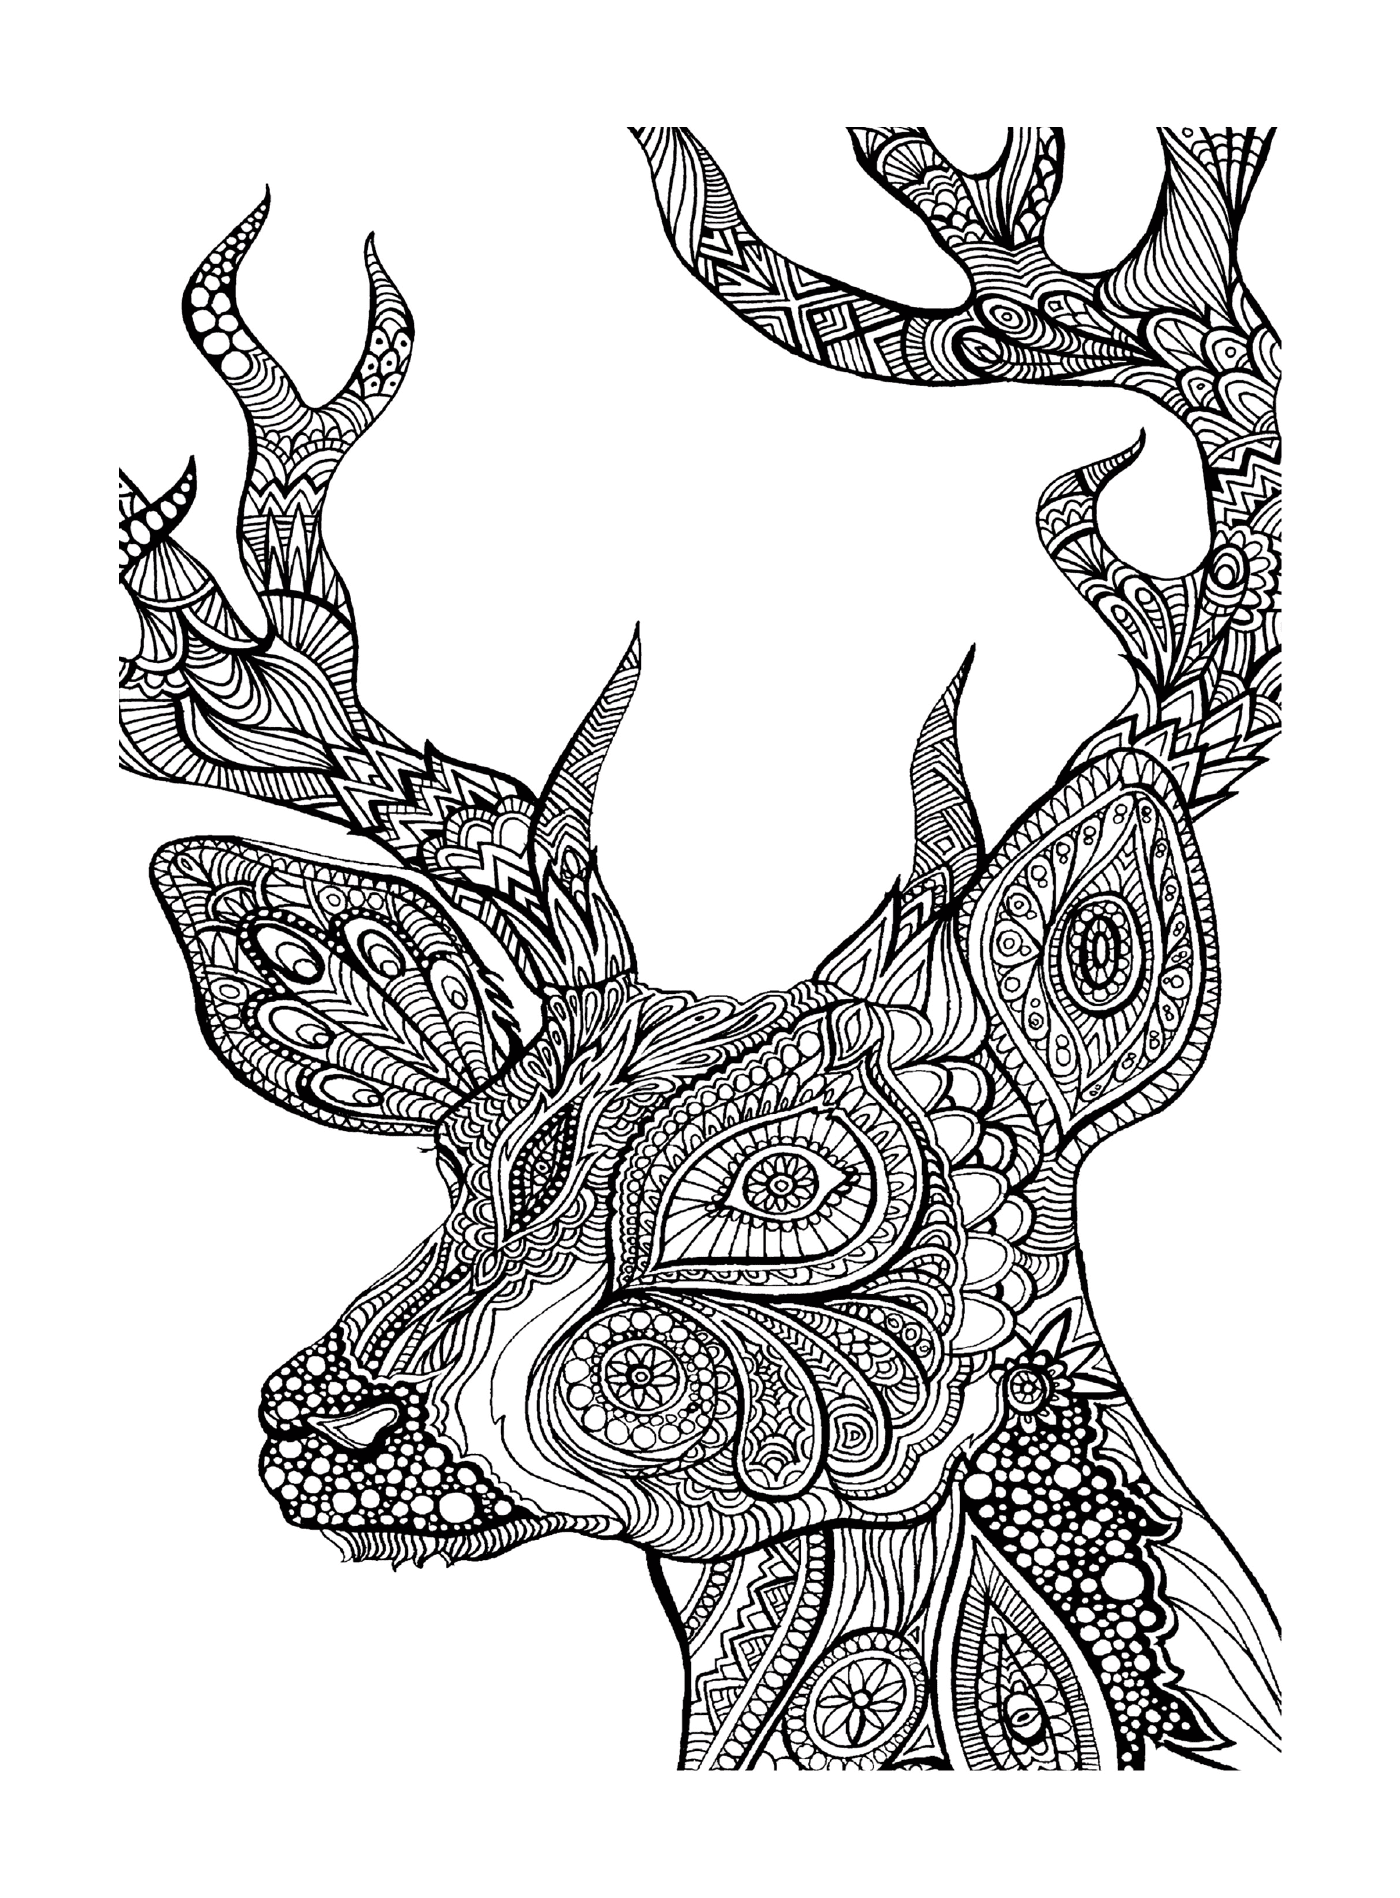  La testa di un cervo 